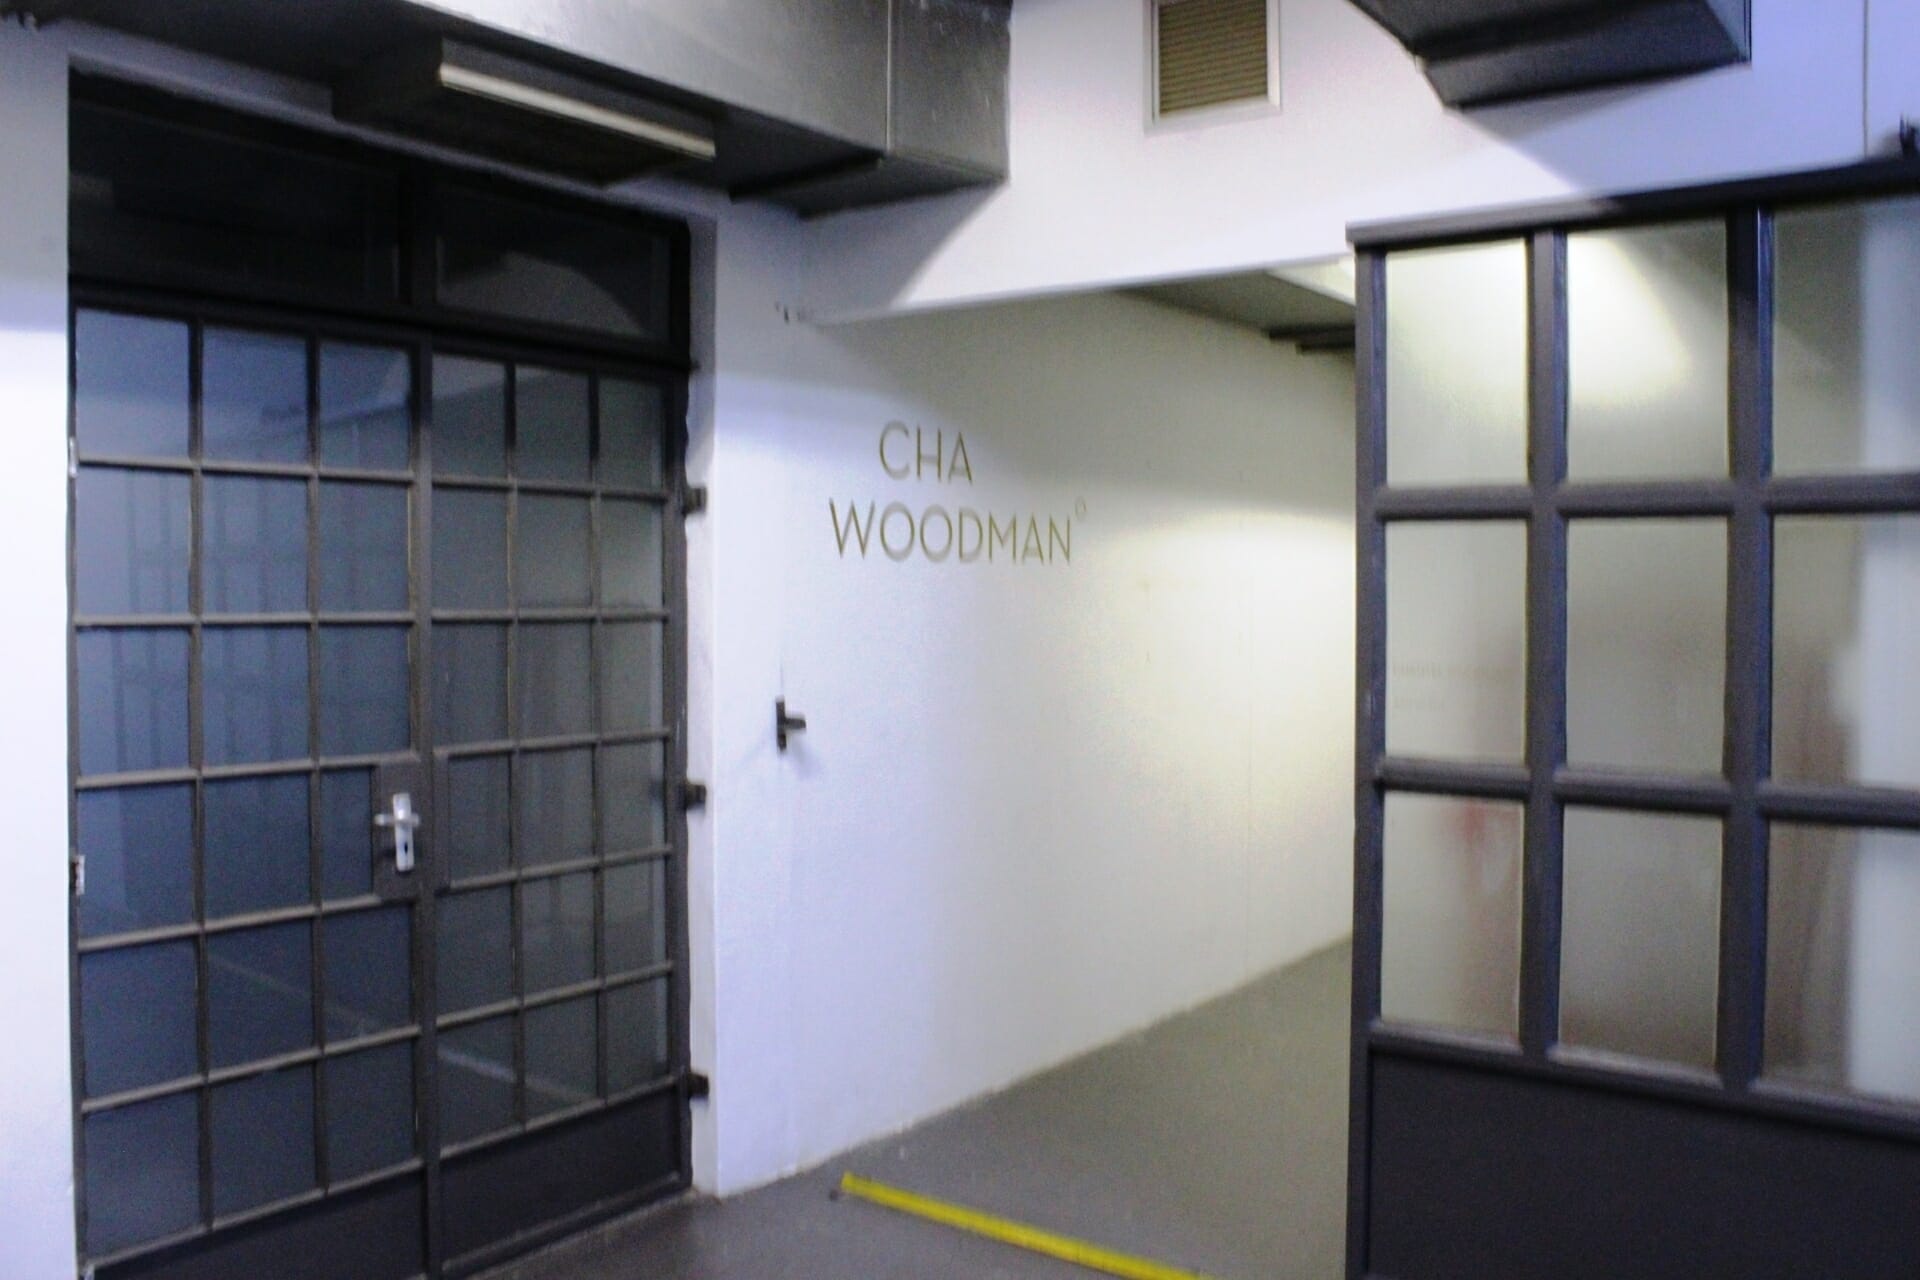 97m² – Ground floor studio/workshop at Woodstock Foundry with exposure to Albert Road